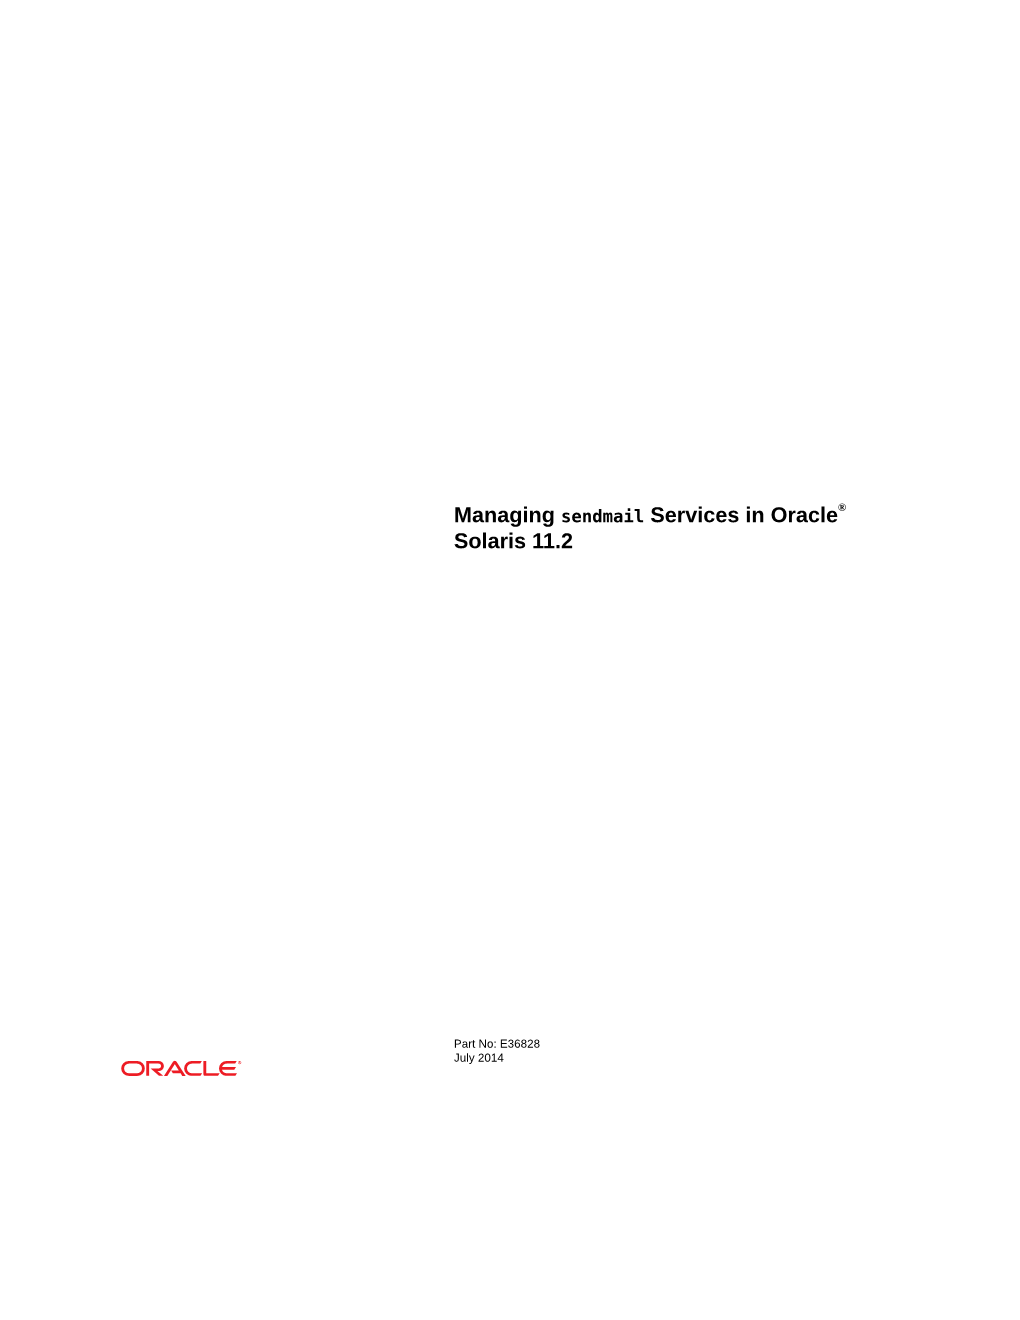 Managing Sendmail Services in Oracle® Solaris 11.2